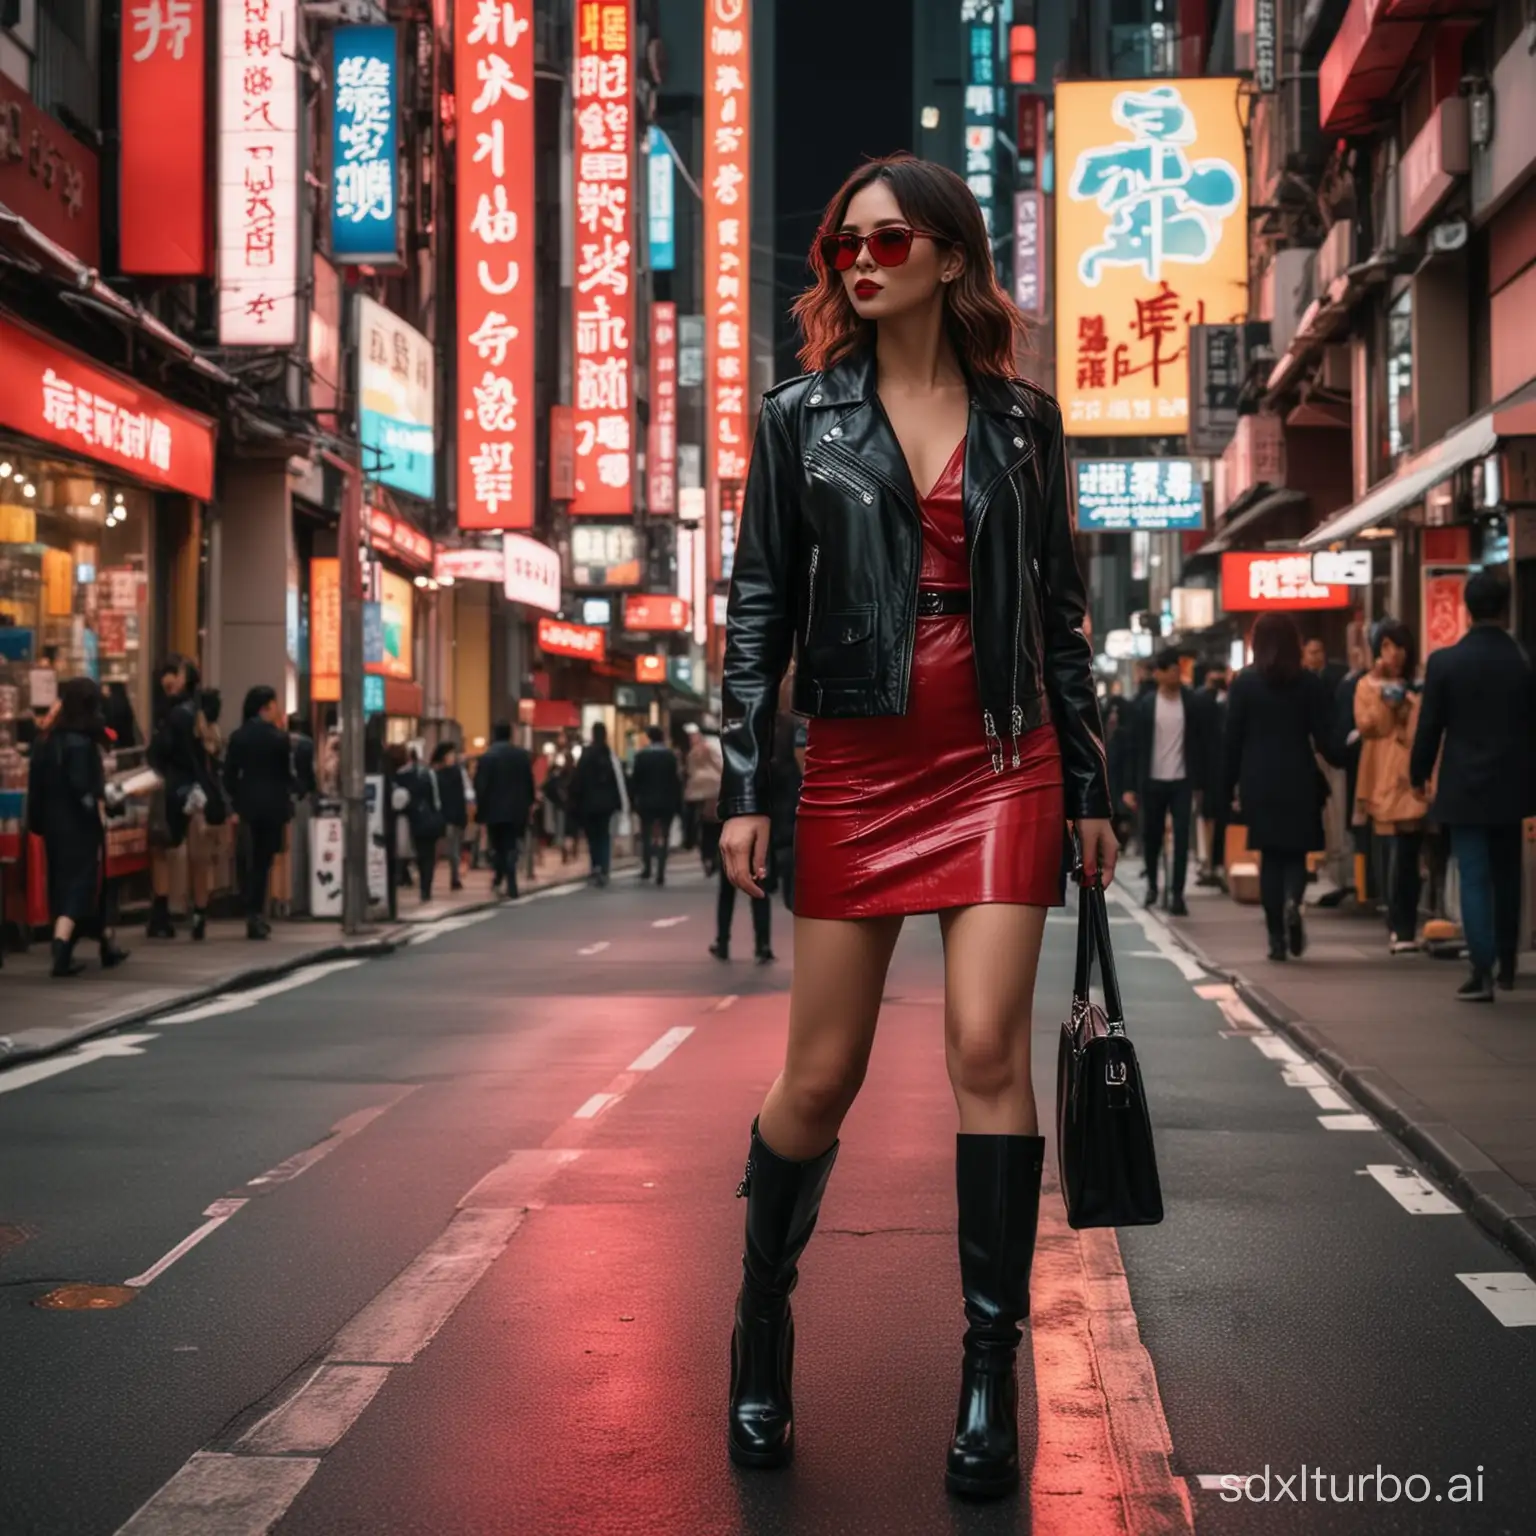 Stylish-Woman-Walking-Amid-Glowing-Neon-Lights-in-Tokyo